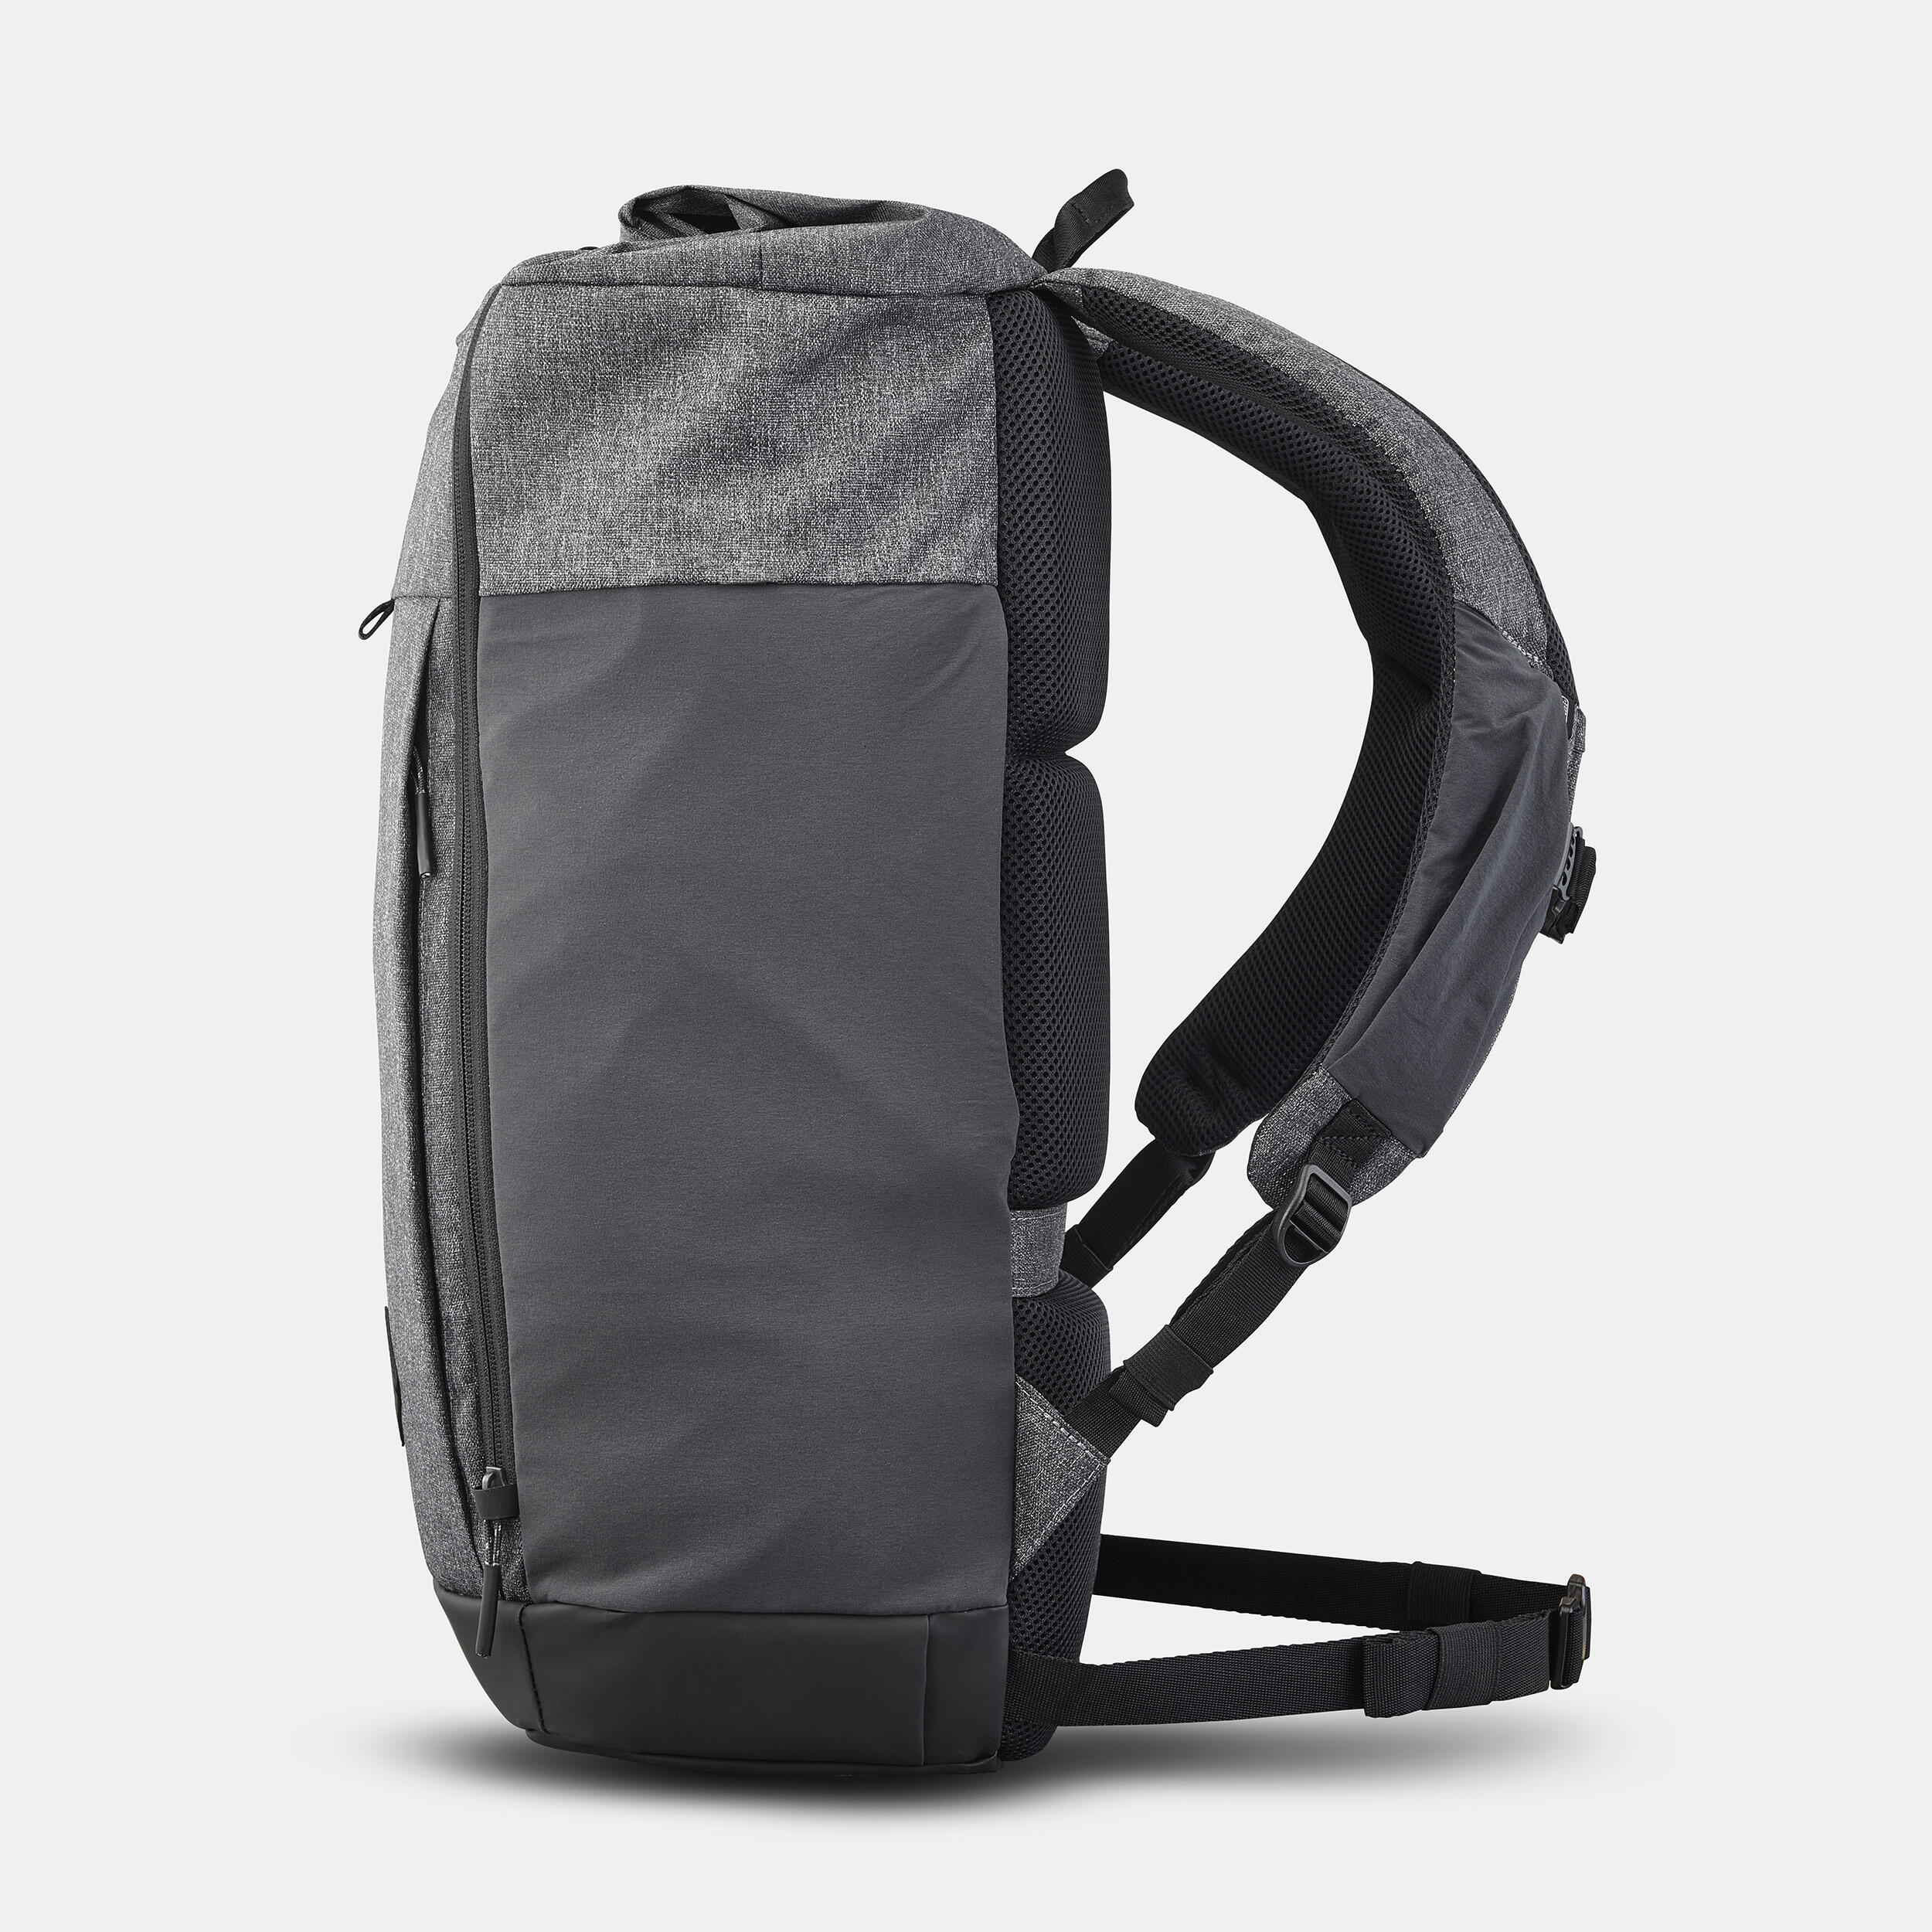 Hiking Backpack 32 L - NH 500 Grey/Black - Carbon grey, black - Quechua ...